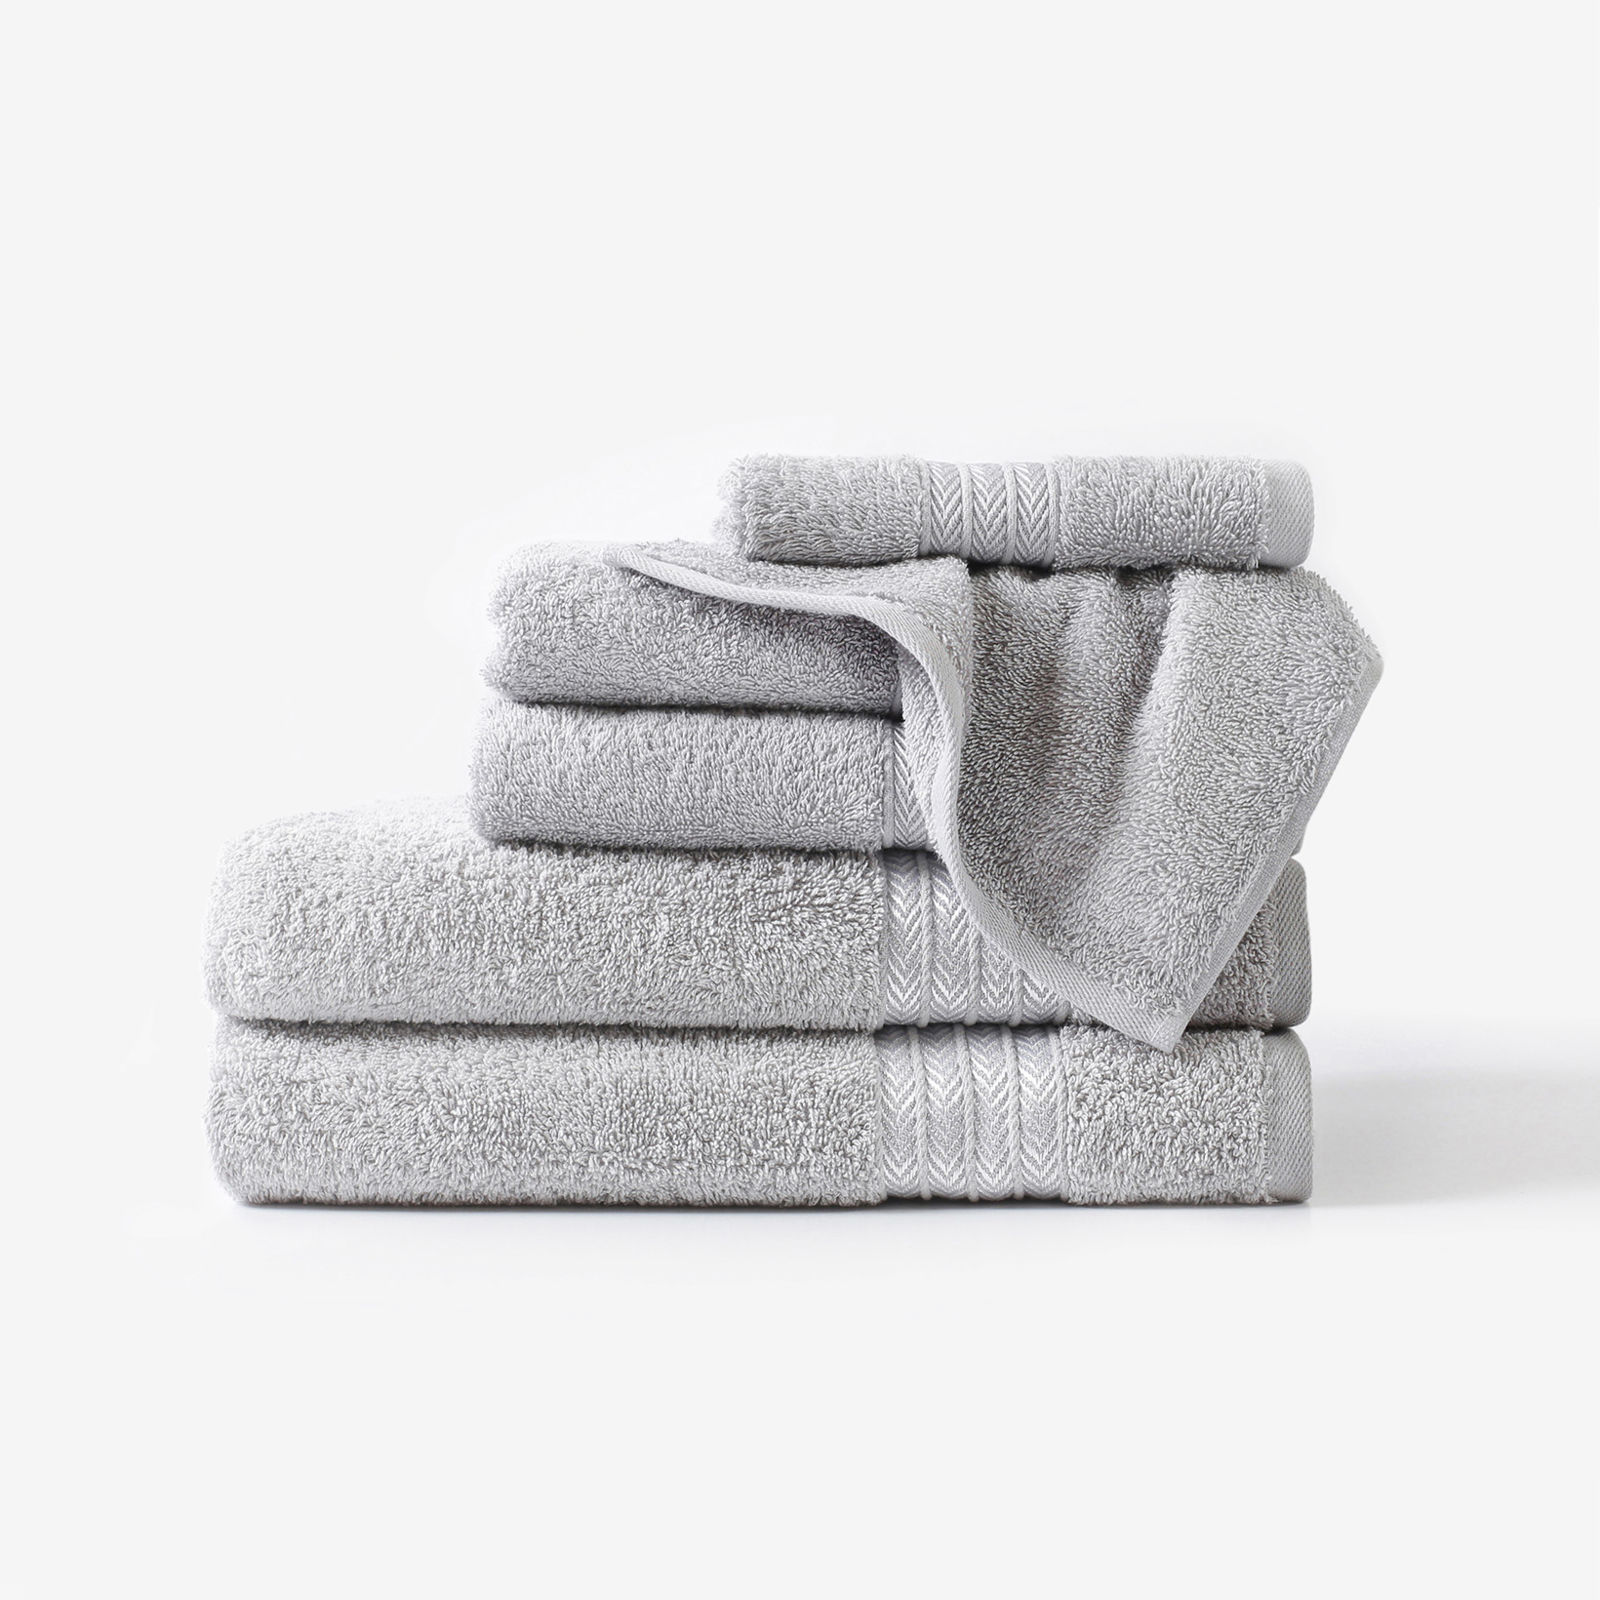 Ręcznik frotte Kaya - jasnoszary